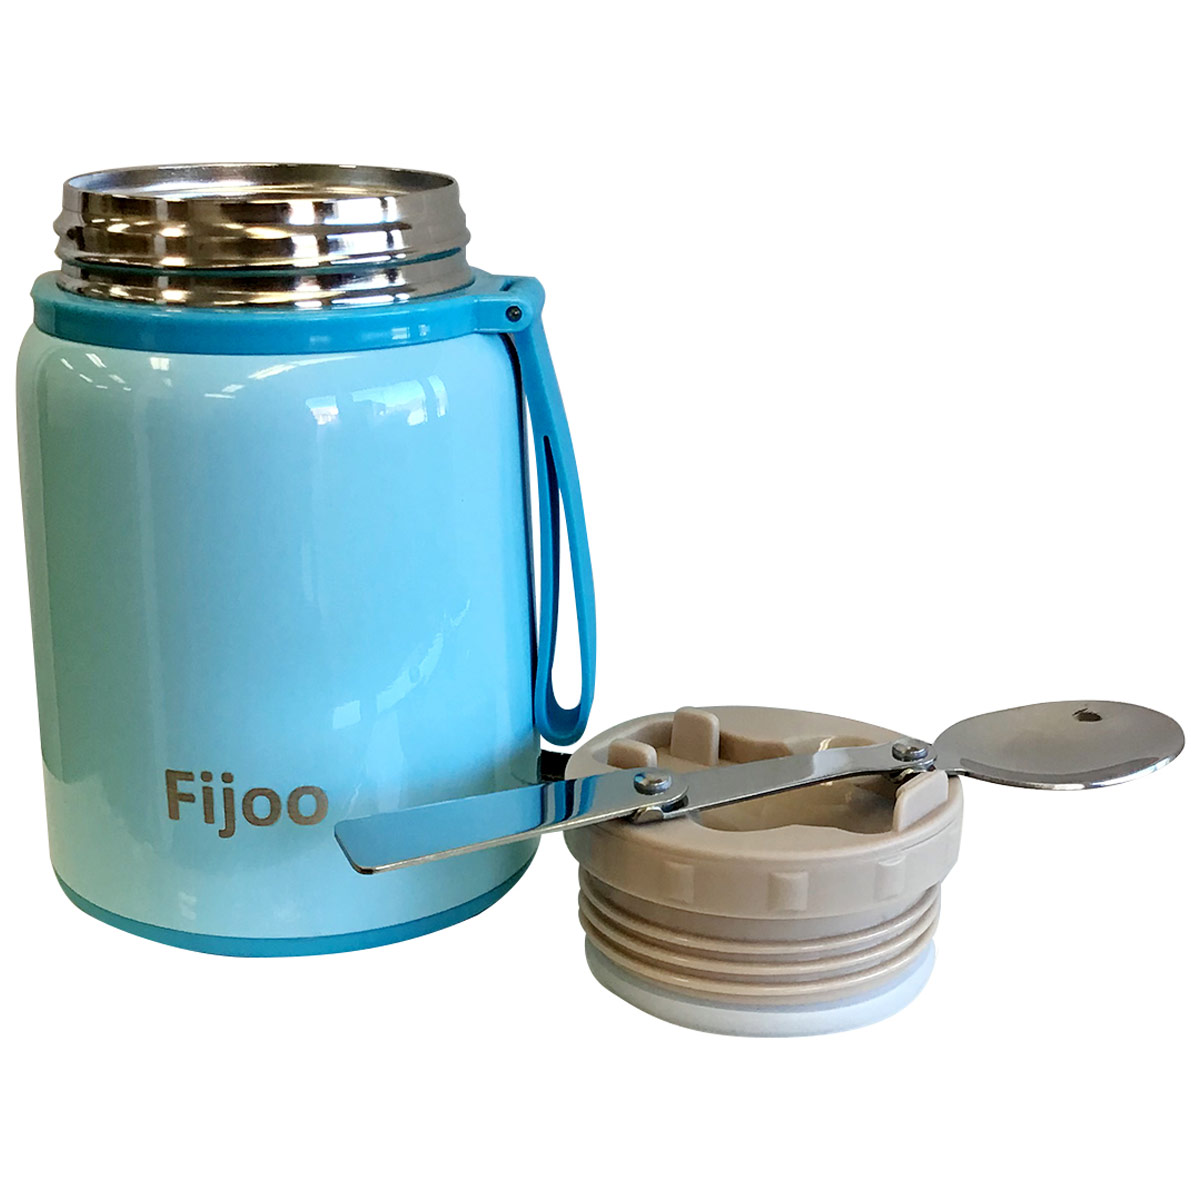 Fijoo 16oz Stainless Steel Thermos Food Jar + Folding Spoon (Blue) - Fijoo